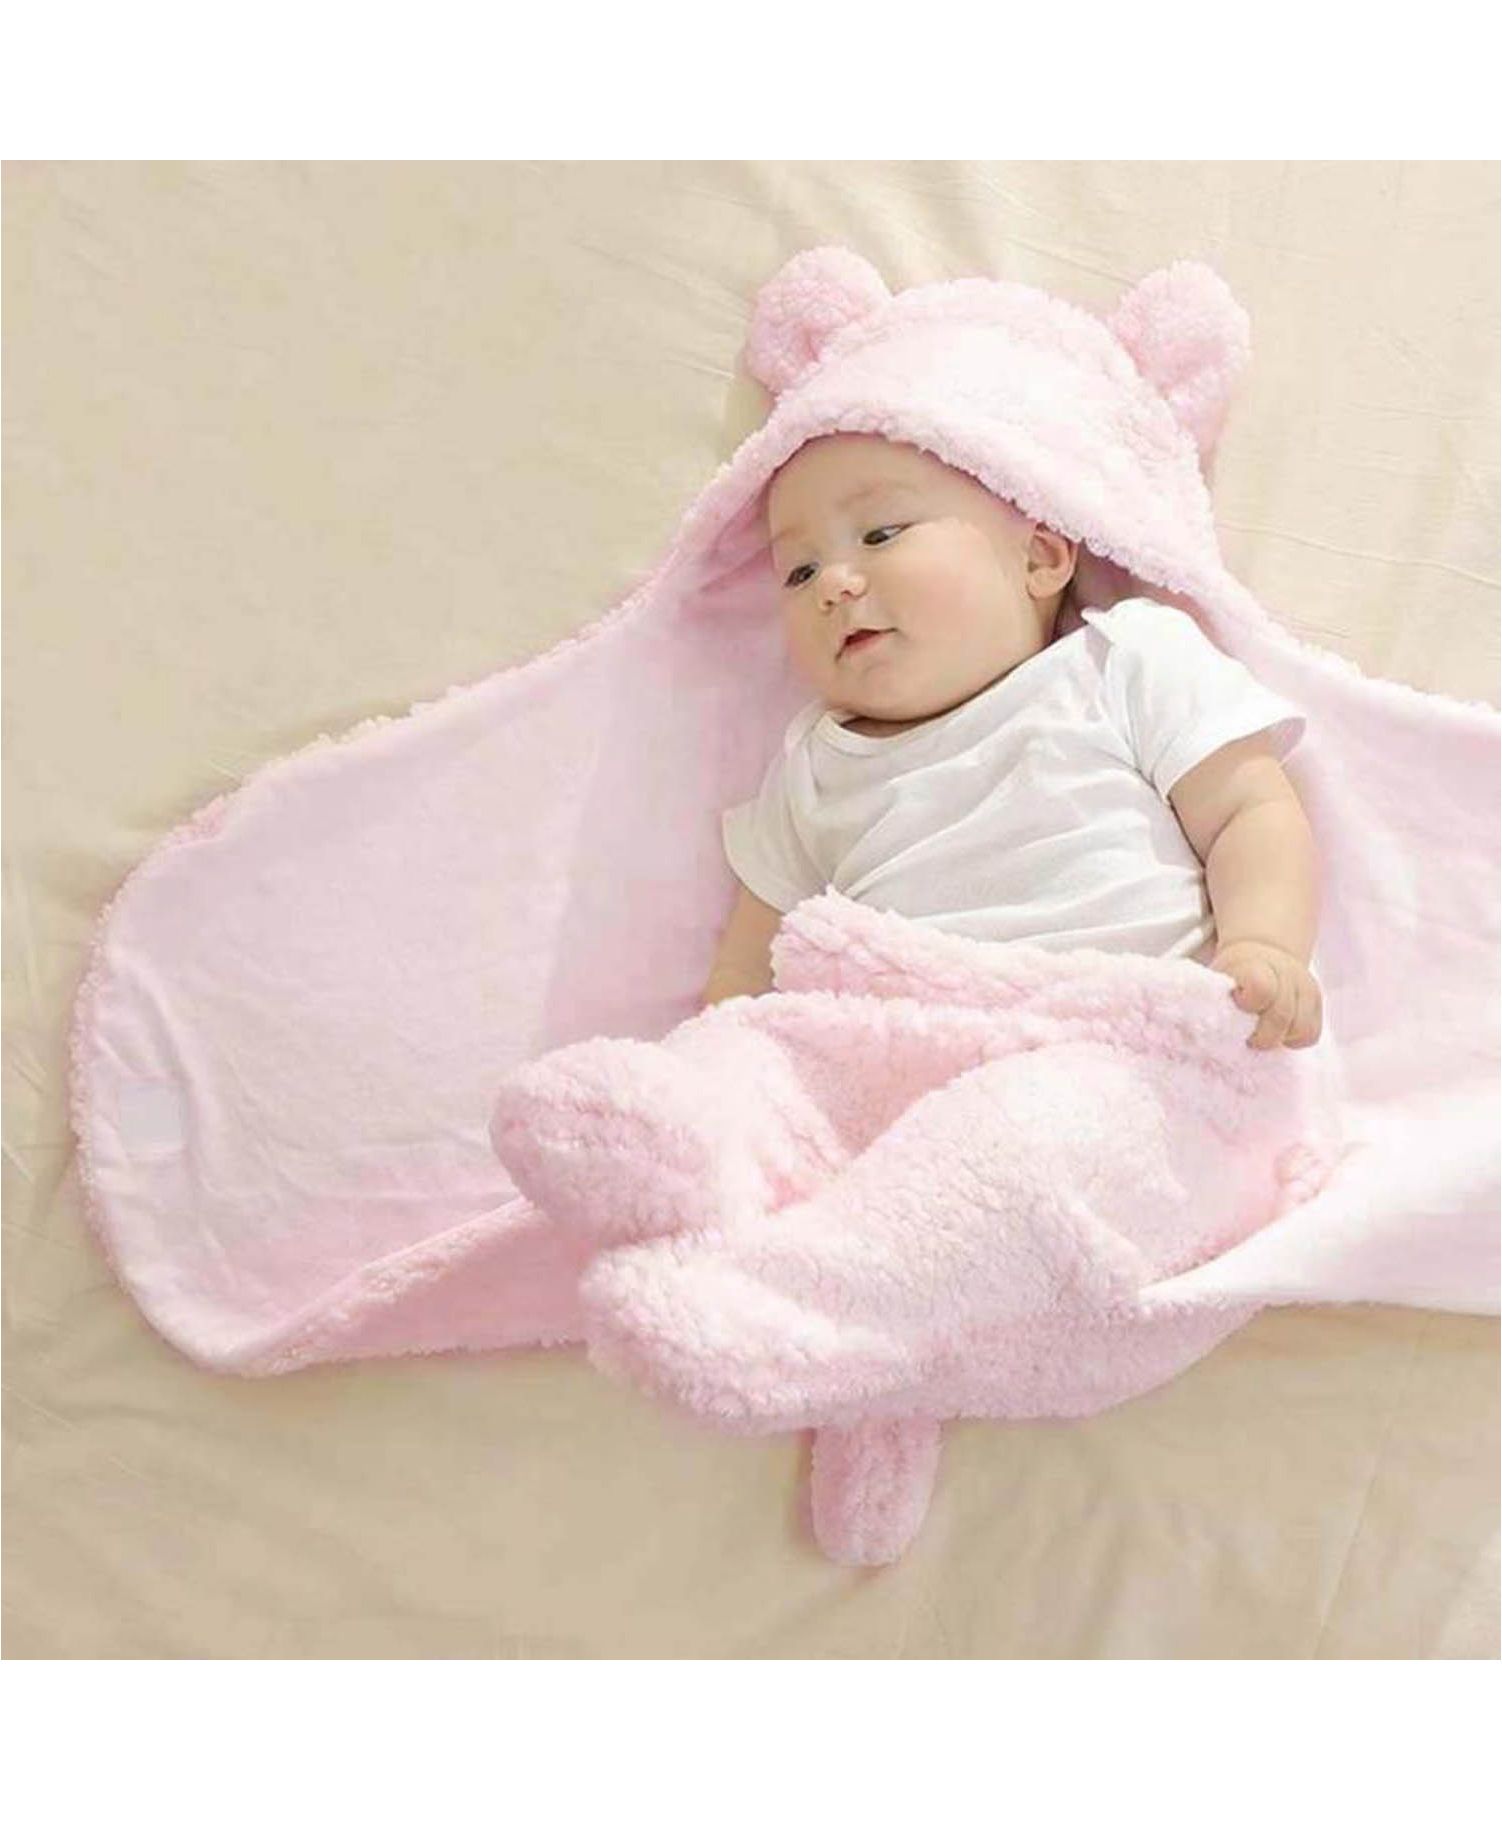 My NewBorn Hooded 2 In 1 Baby Blanket Cum Wrapper Panda Design Pink Online In India